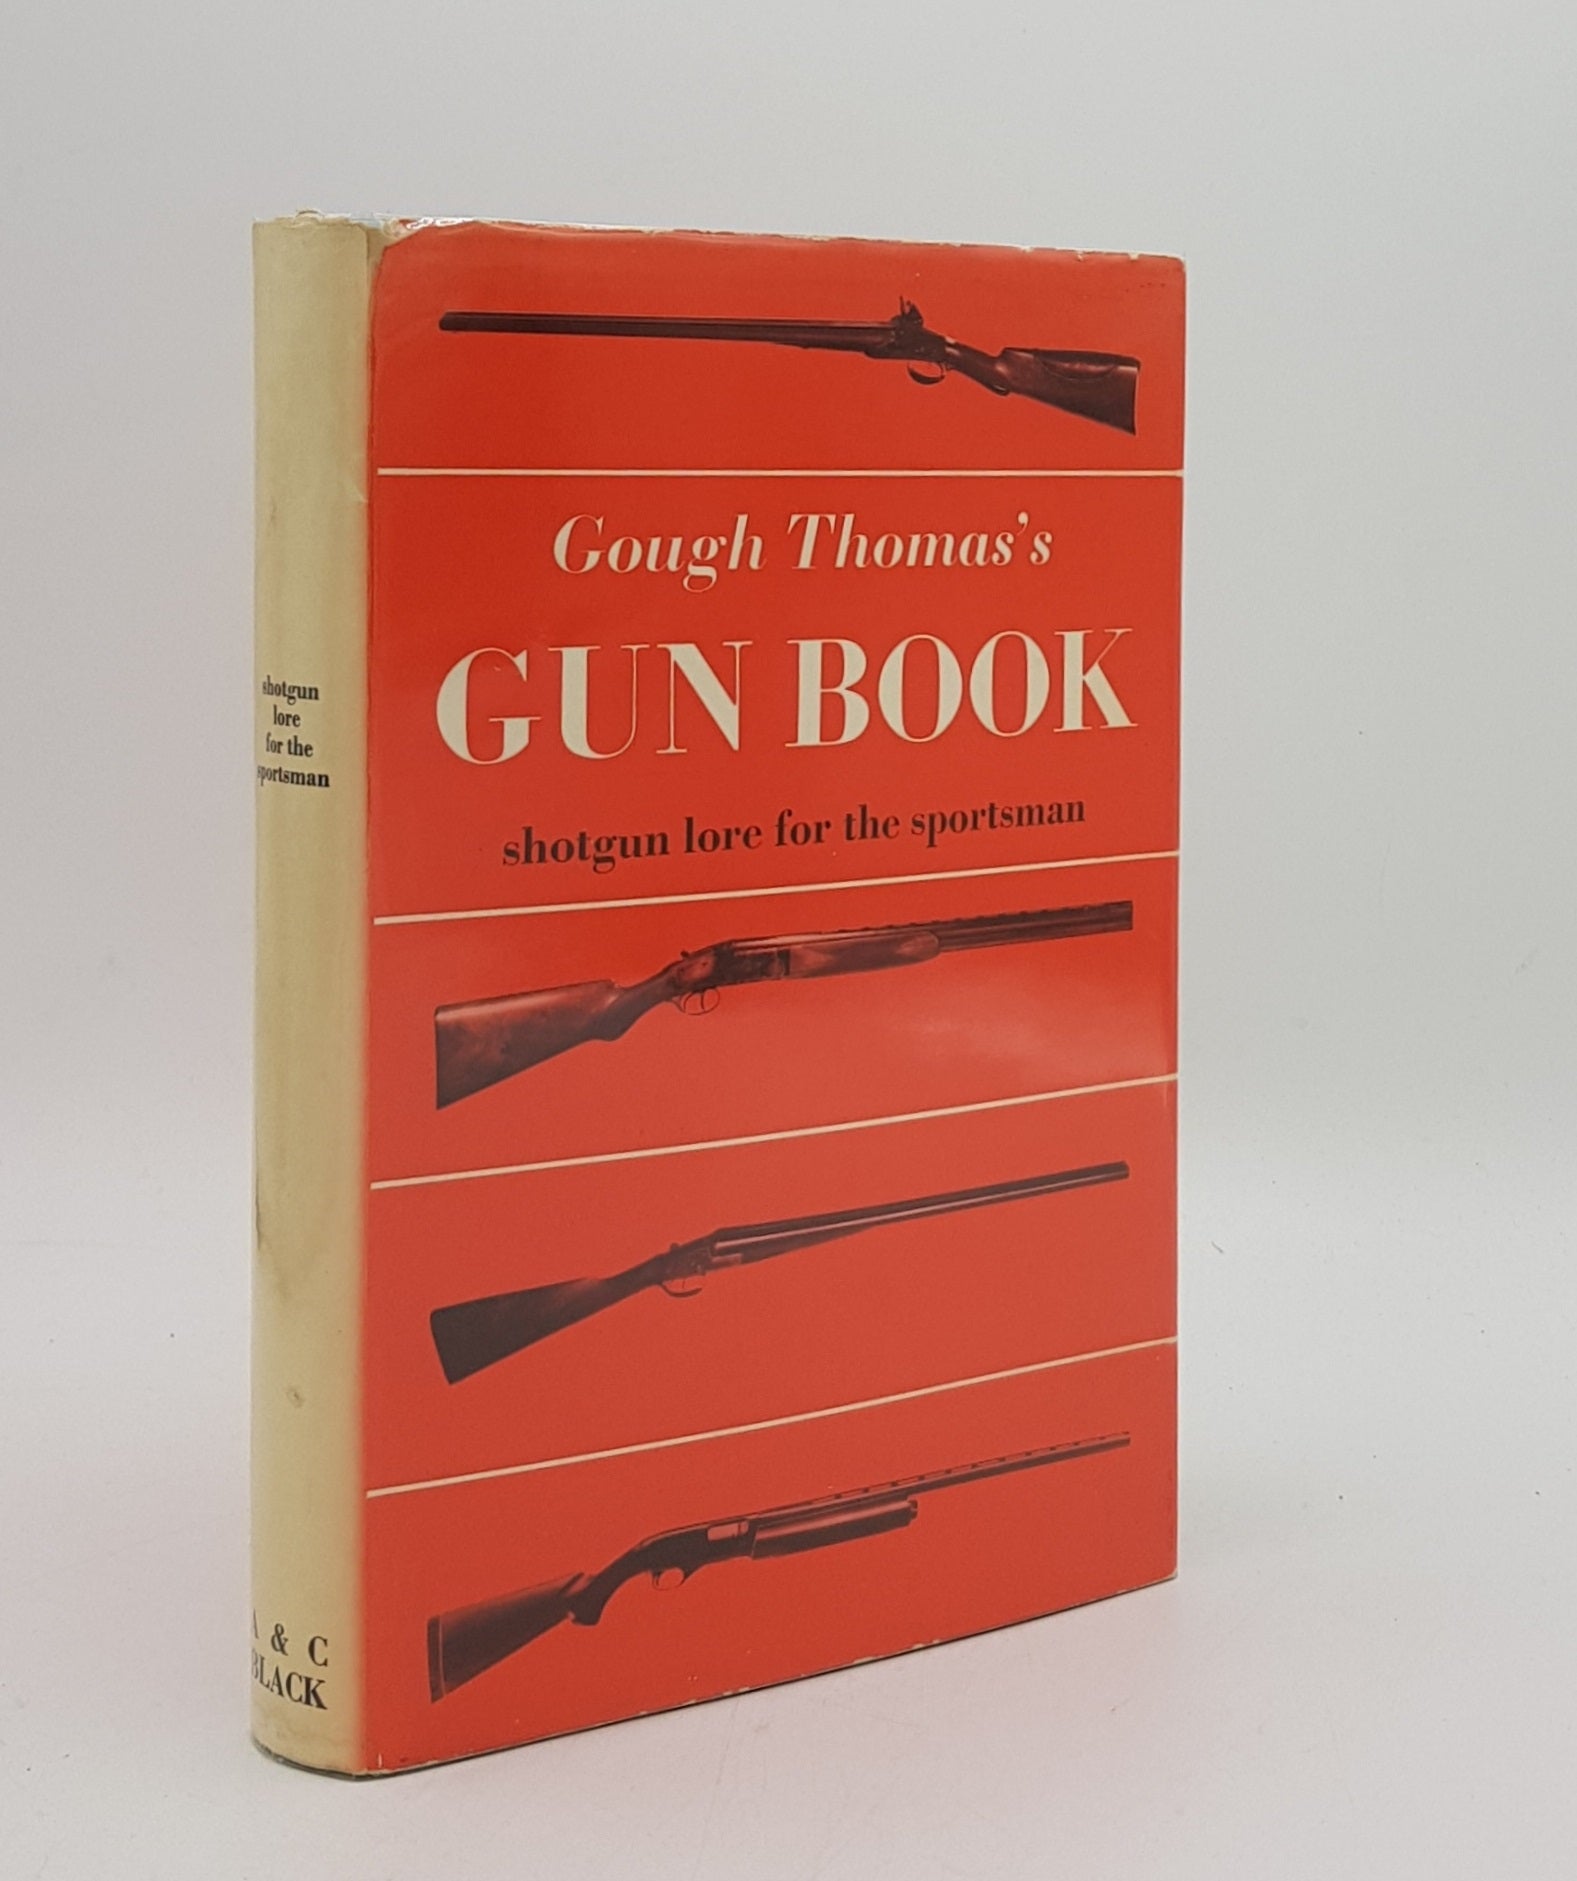 GARWOOD Gough Thomas - Gough Thomas's Gun Book Shotgun Lore for the Sportsman